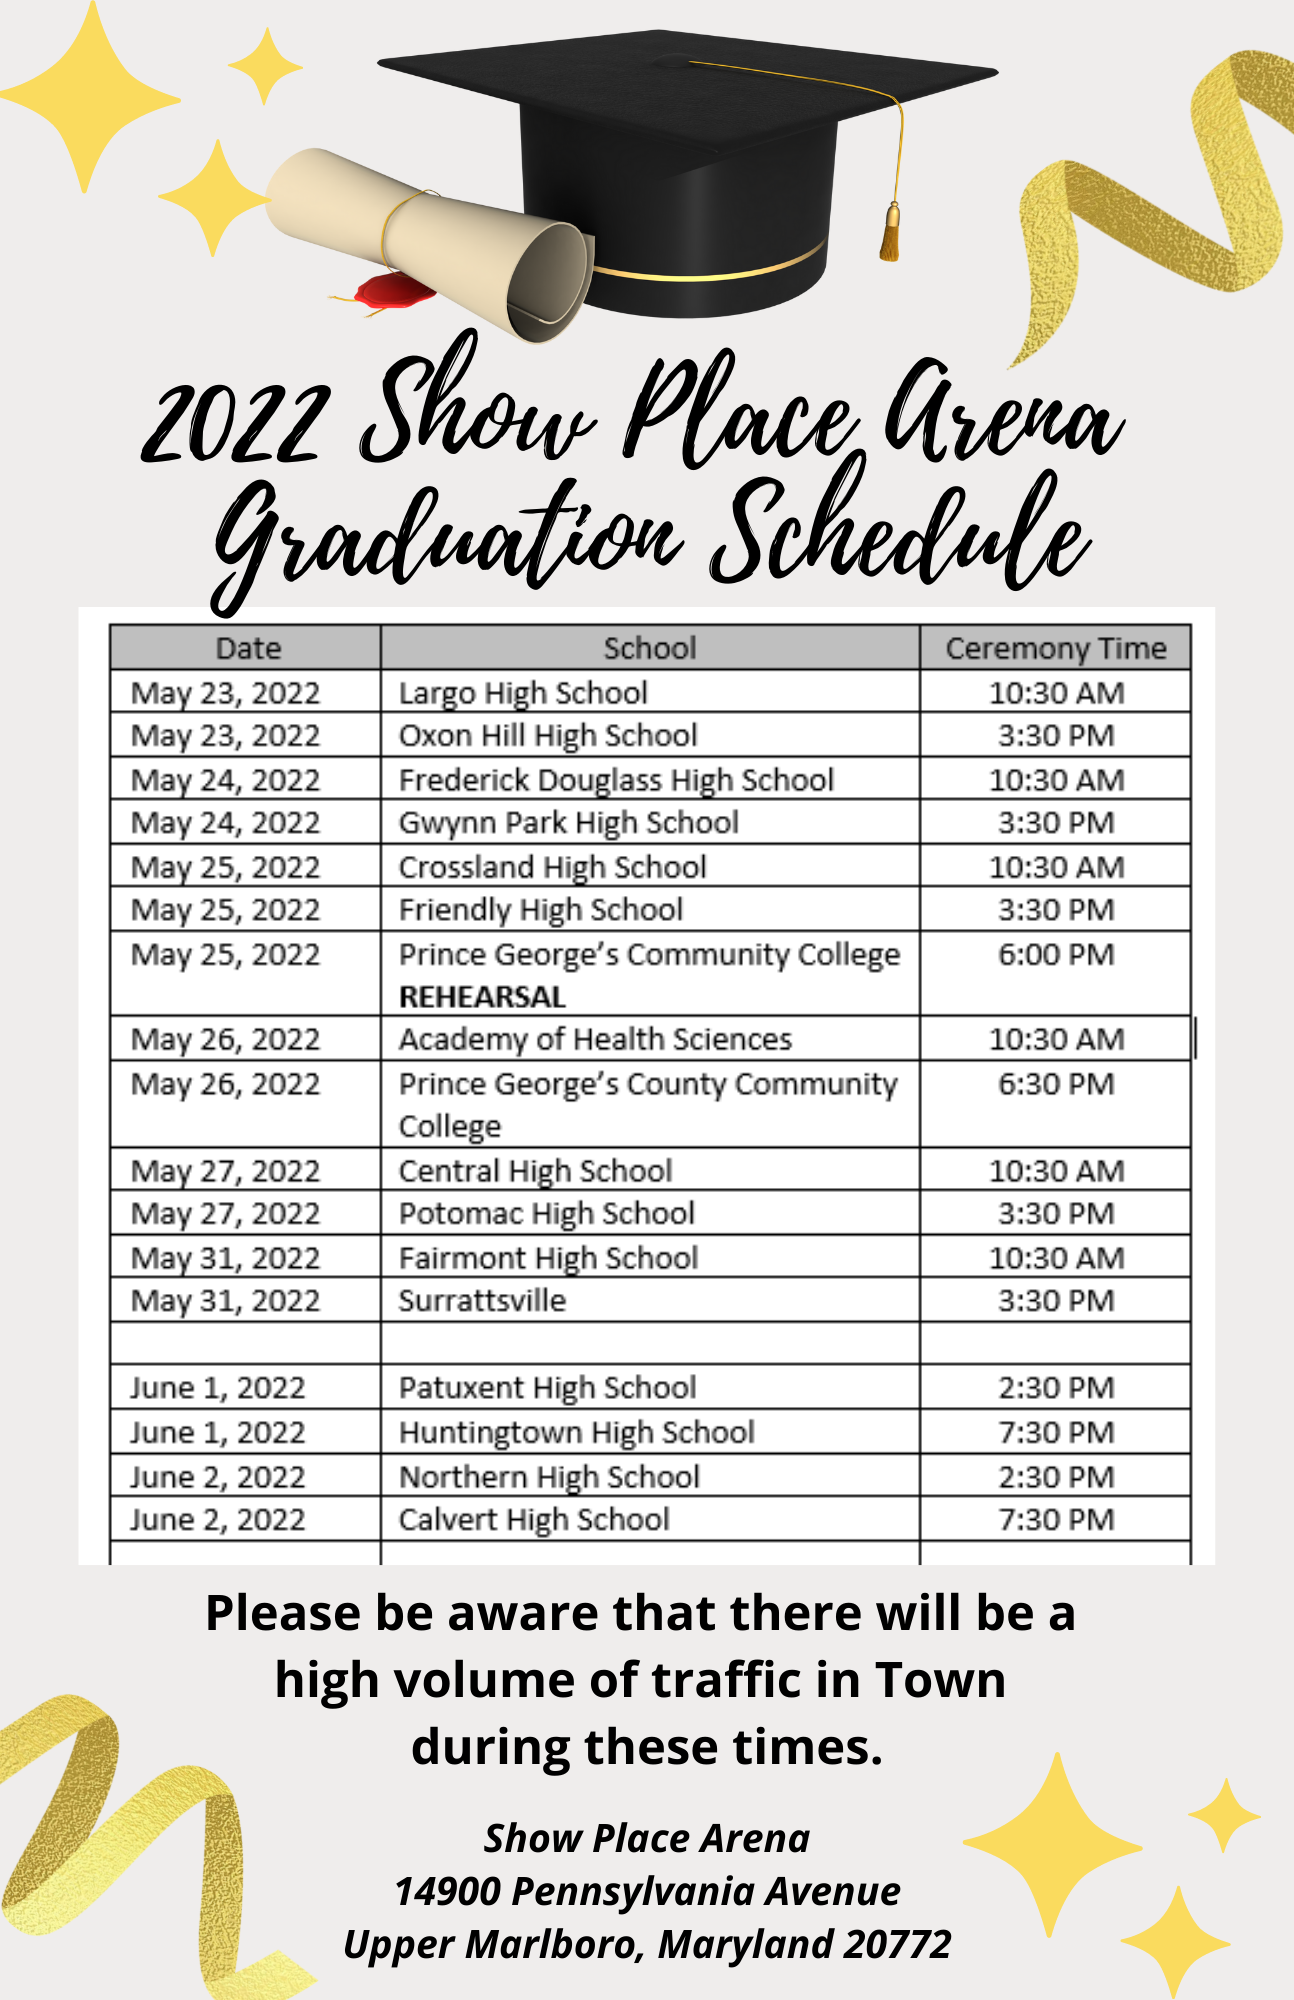 2022 Graduation Schedule